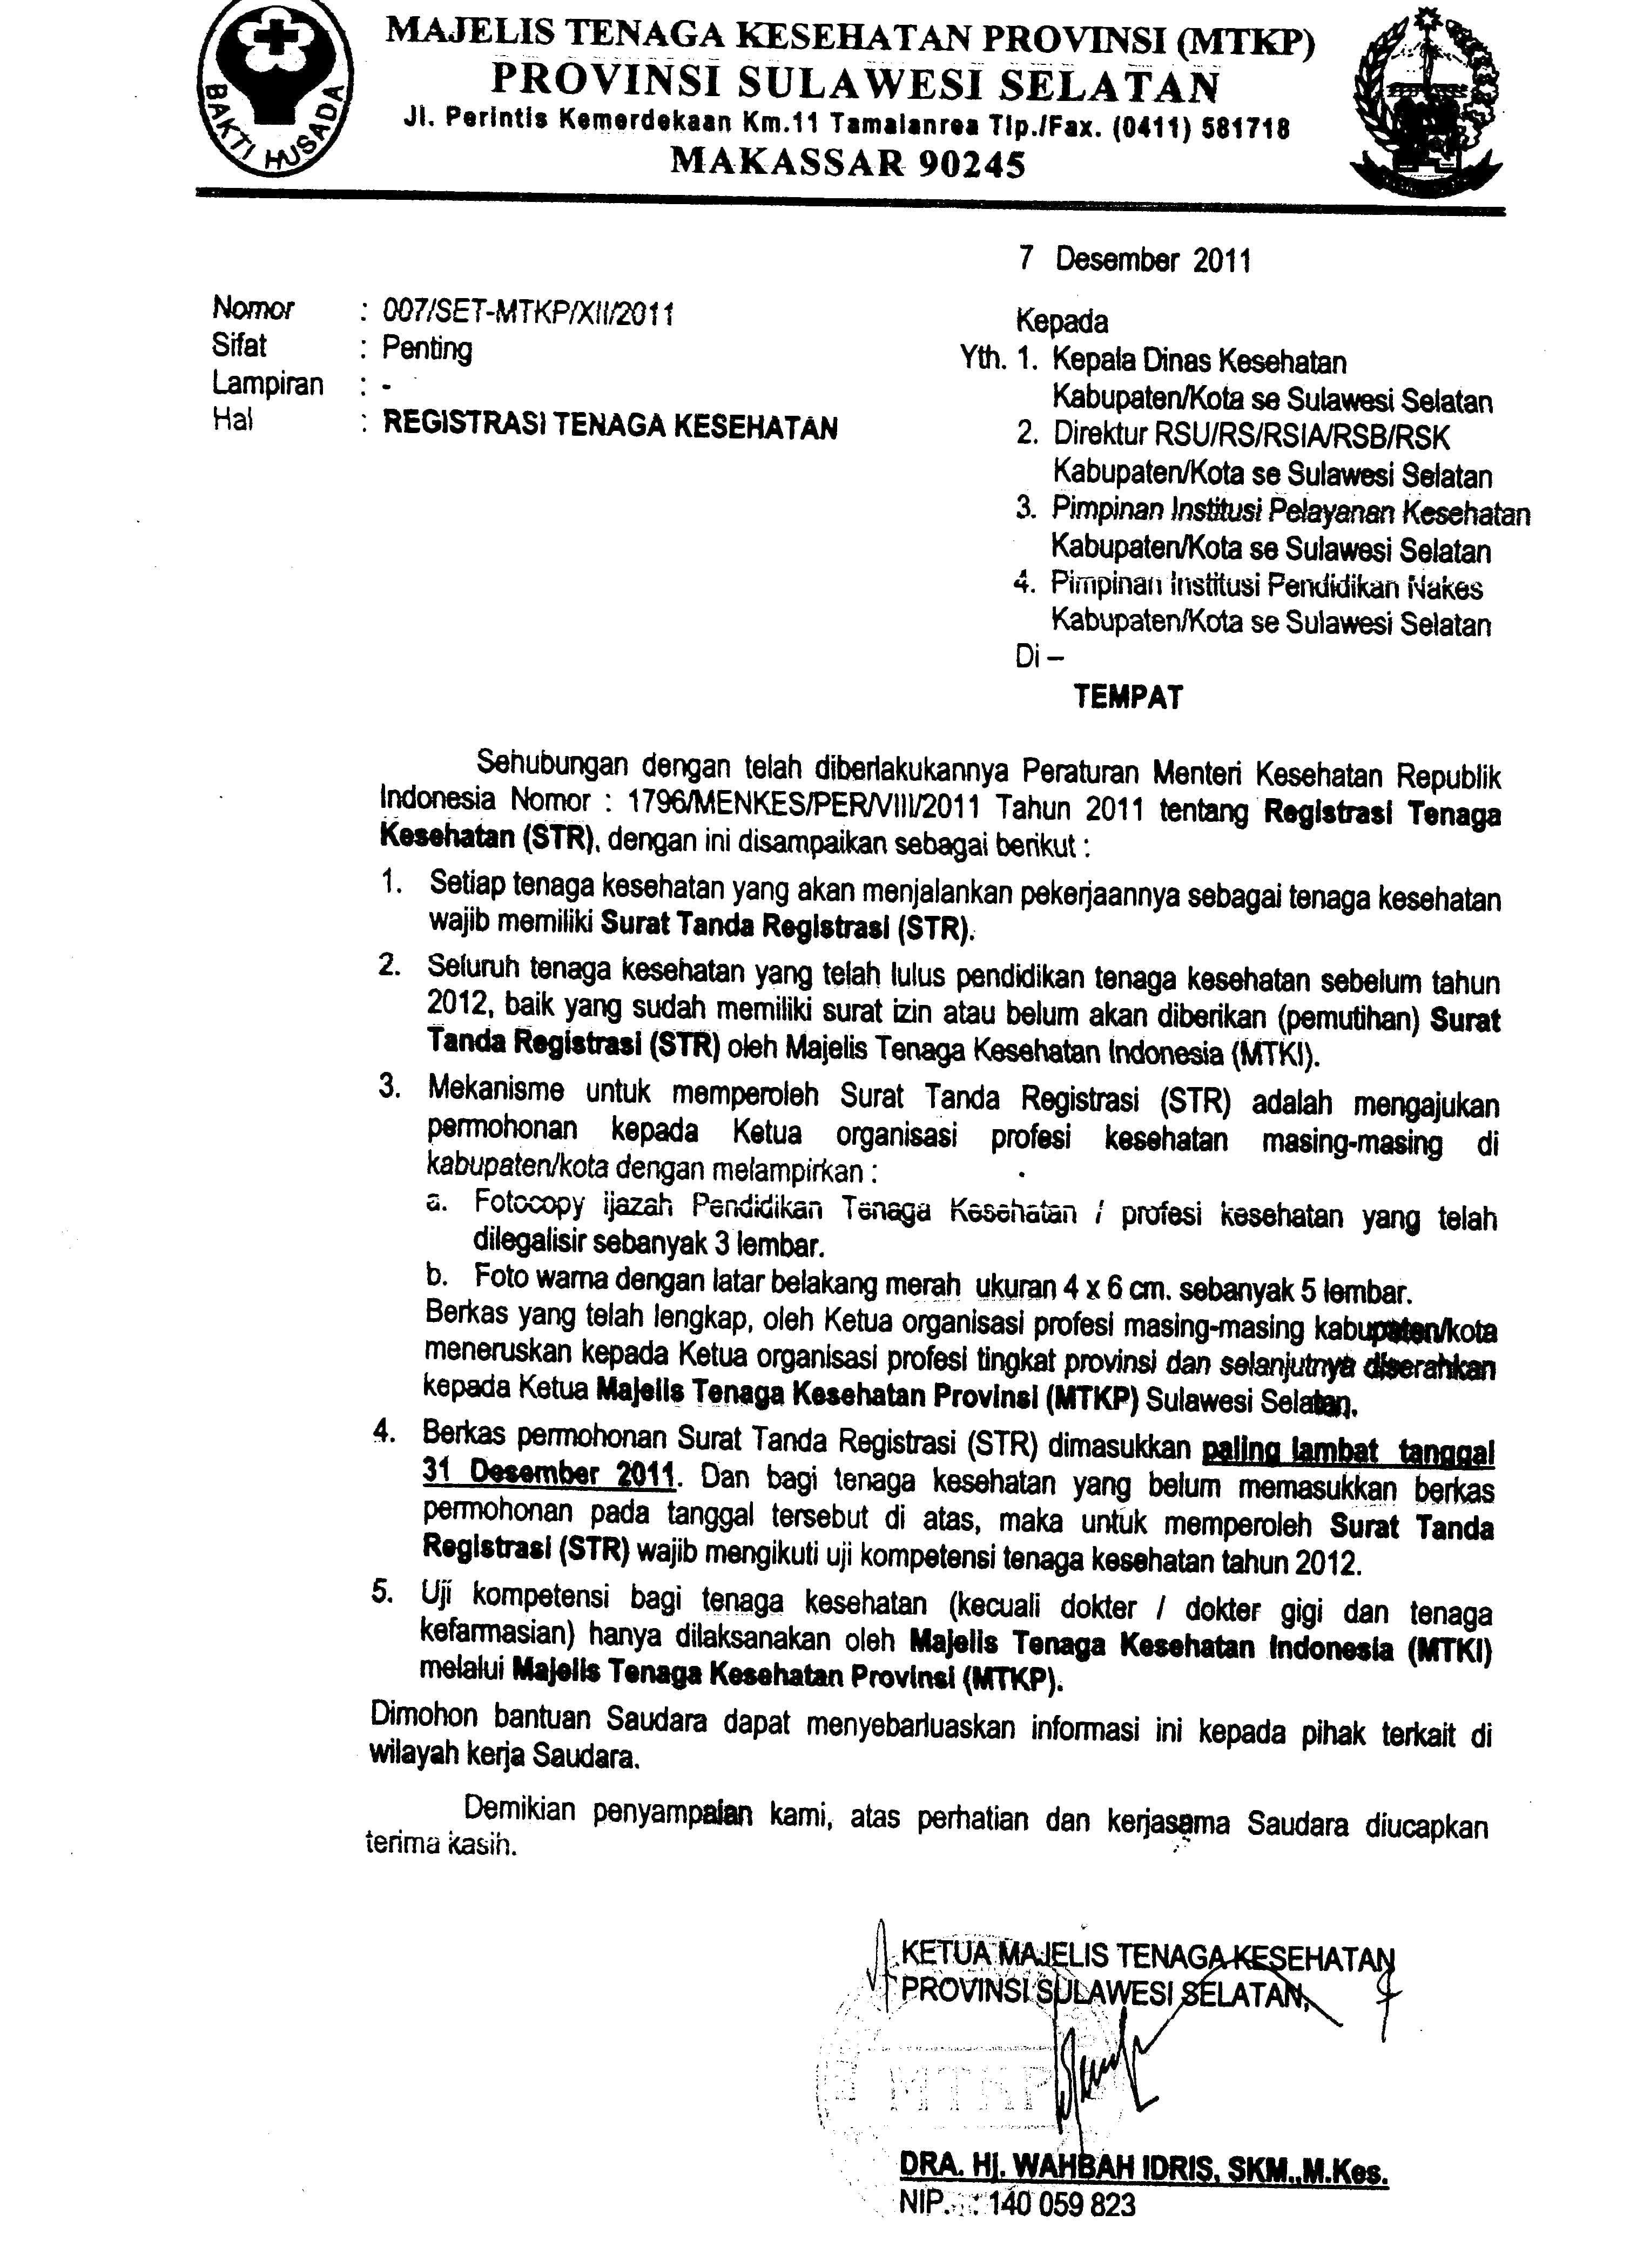 Aneka Contoh Kop Surat Makassar 93 Guna Inspirasi Desain Kop Surat di post Contoh Kop Surat Makassar